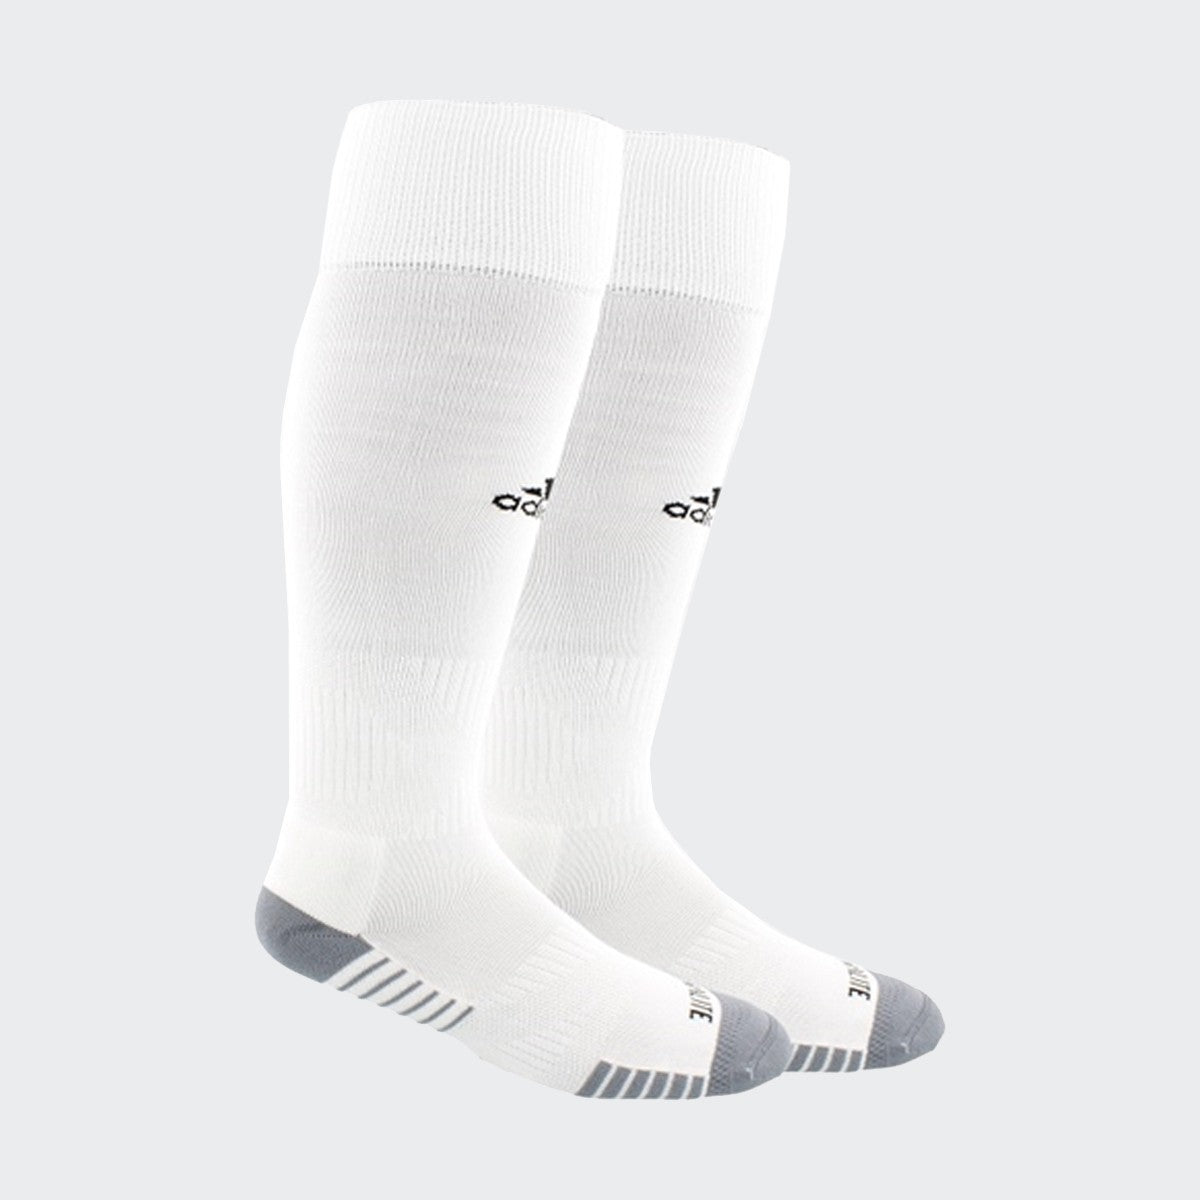 Copa Zone Cushion IV OTC Socks - White/Gray